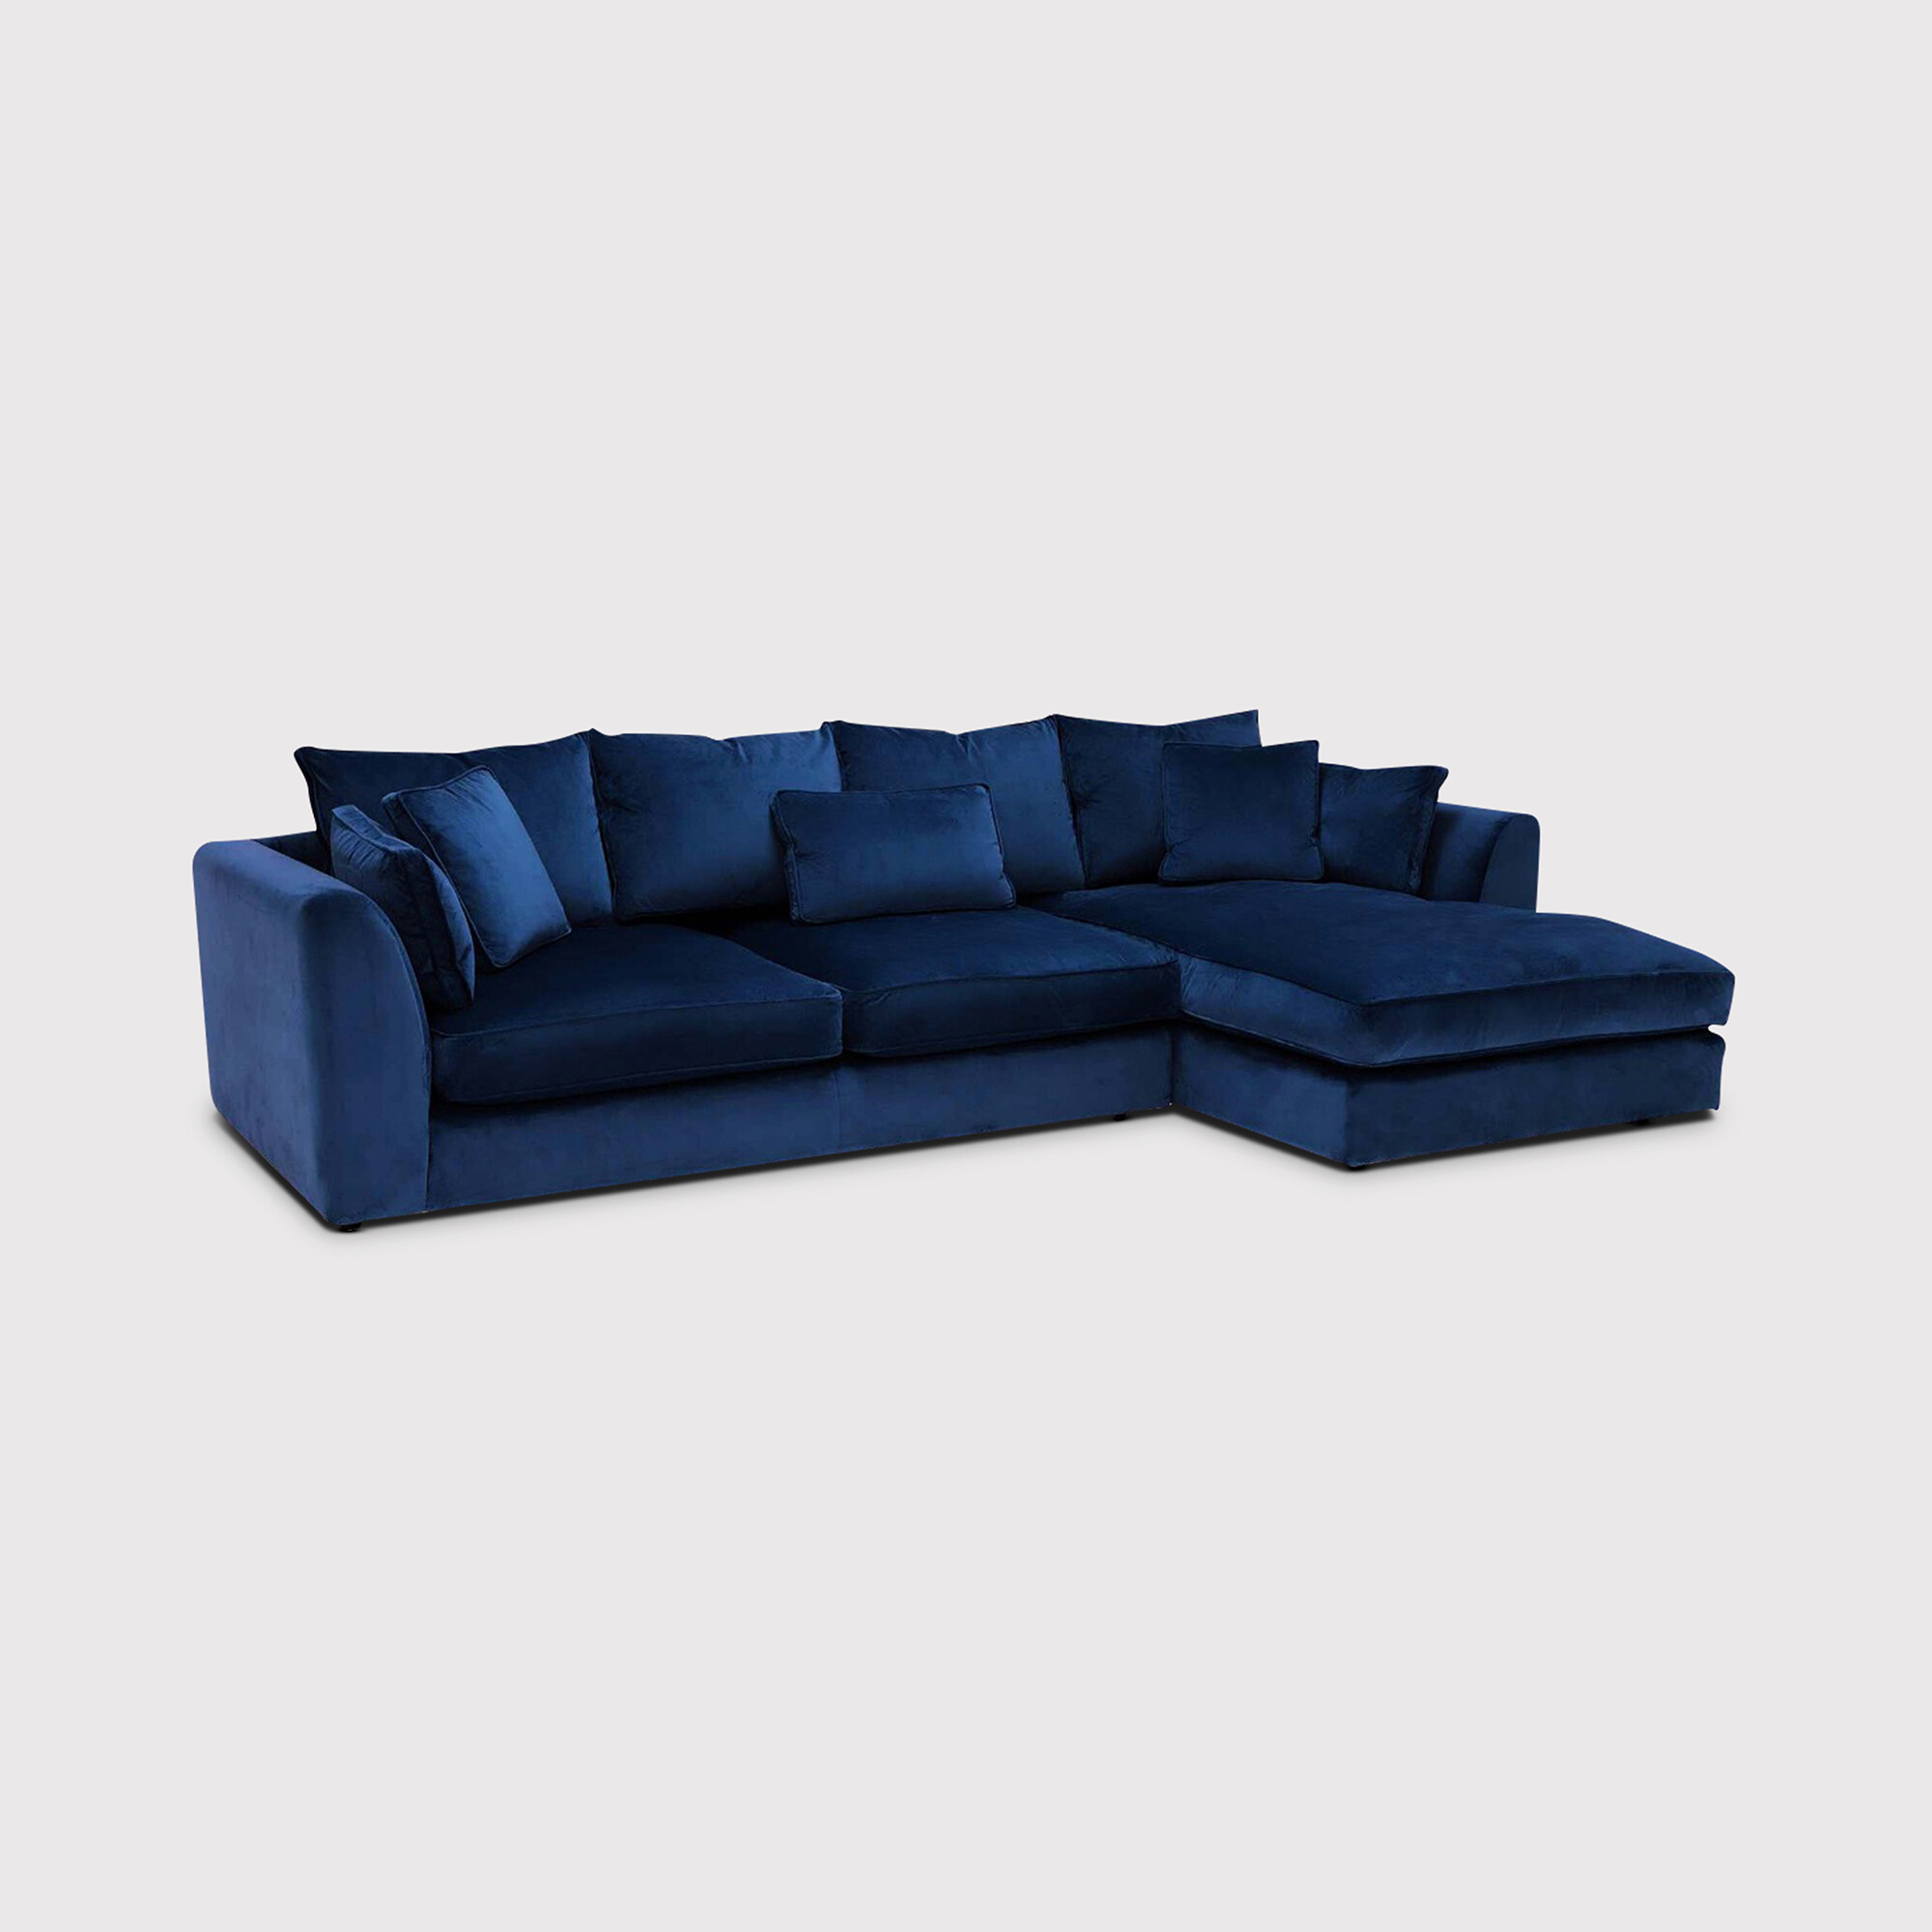 Harrington Large Chaise Sofa Right, Blue Fabric | Barker & Stonehouse